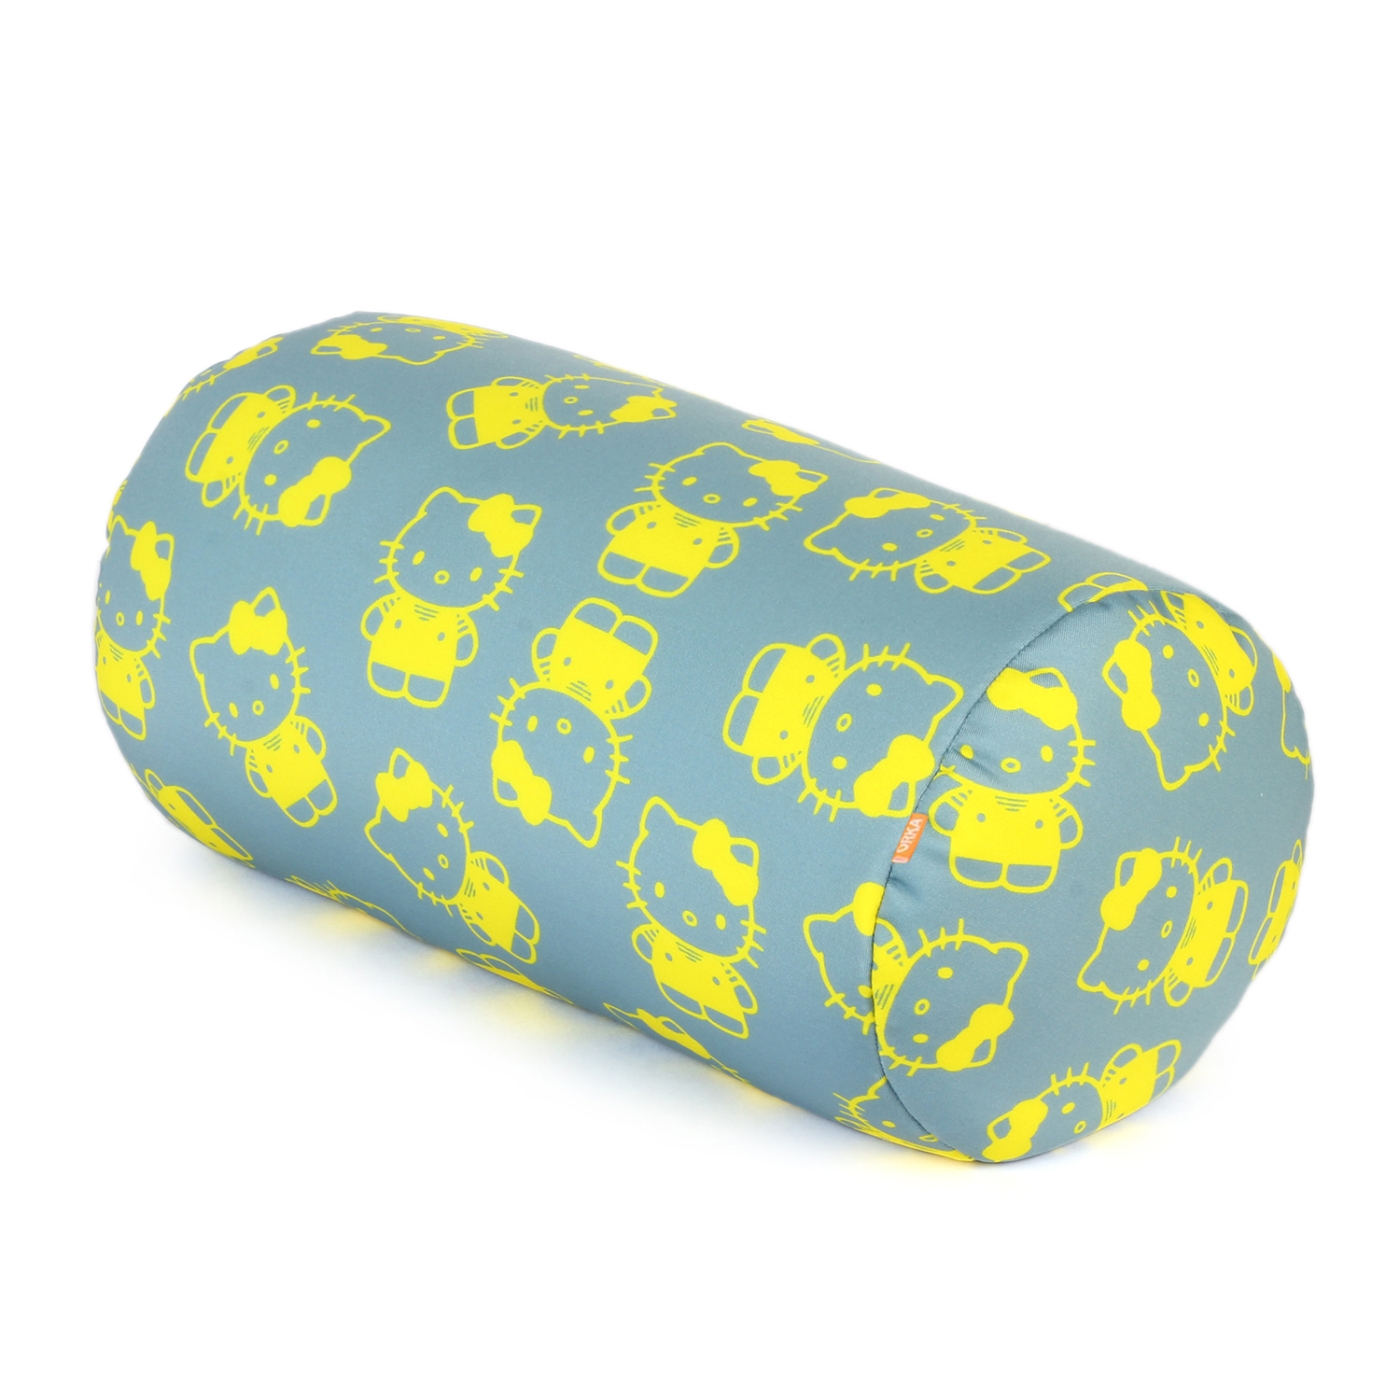 ORKA Digital Printed Microbeads Bolster Cushion - Grey, Yellow  